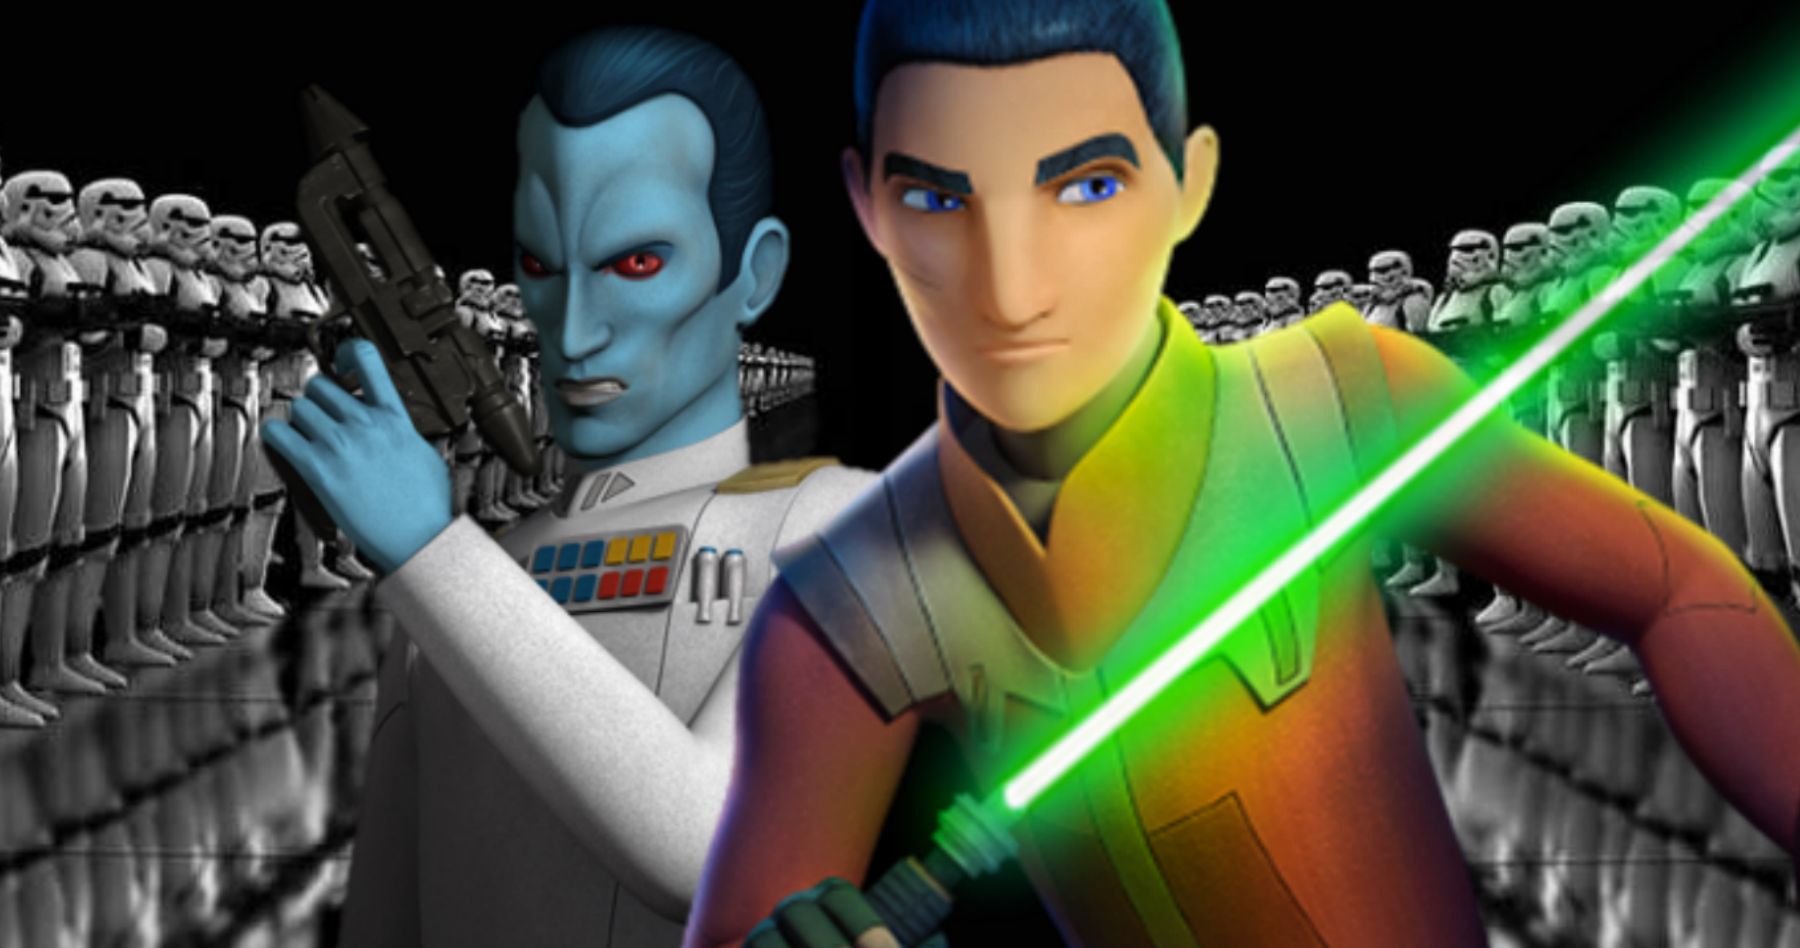 Thrawn and Ezra Bridger to Return in Star Wars Live-Action Disney+ Series?